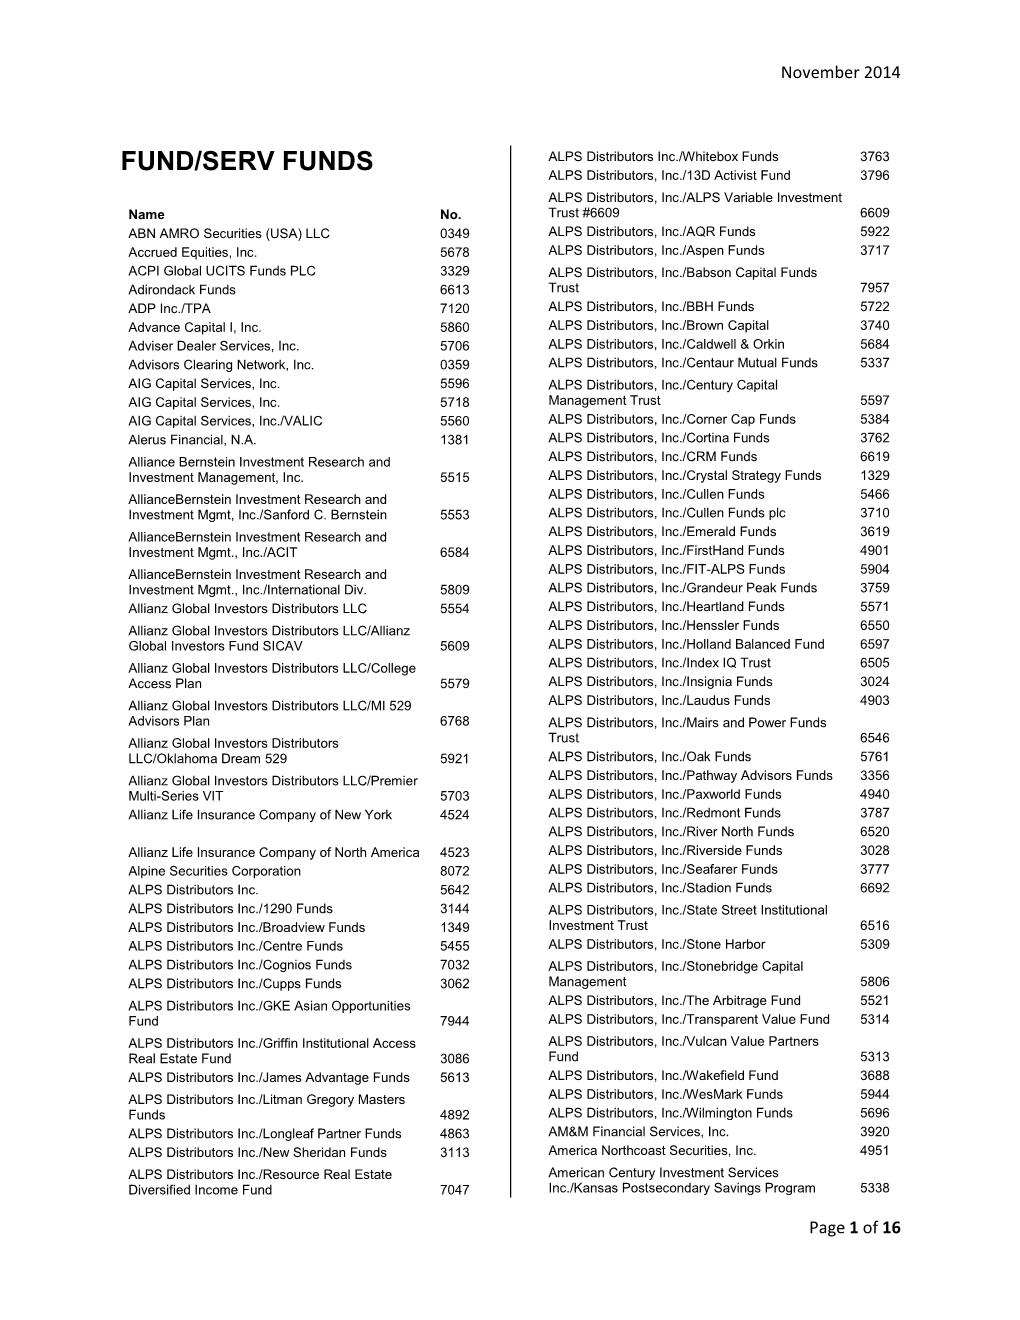 FUND/SERV FUNDS ALPS Distributors Inc./Whitebox Funds 3763 ALPS Distributors, Inc./13D Activist Fund 3796 ALPS Distributors, Inc./ALPS Variable Investment Name No